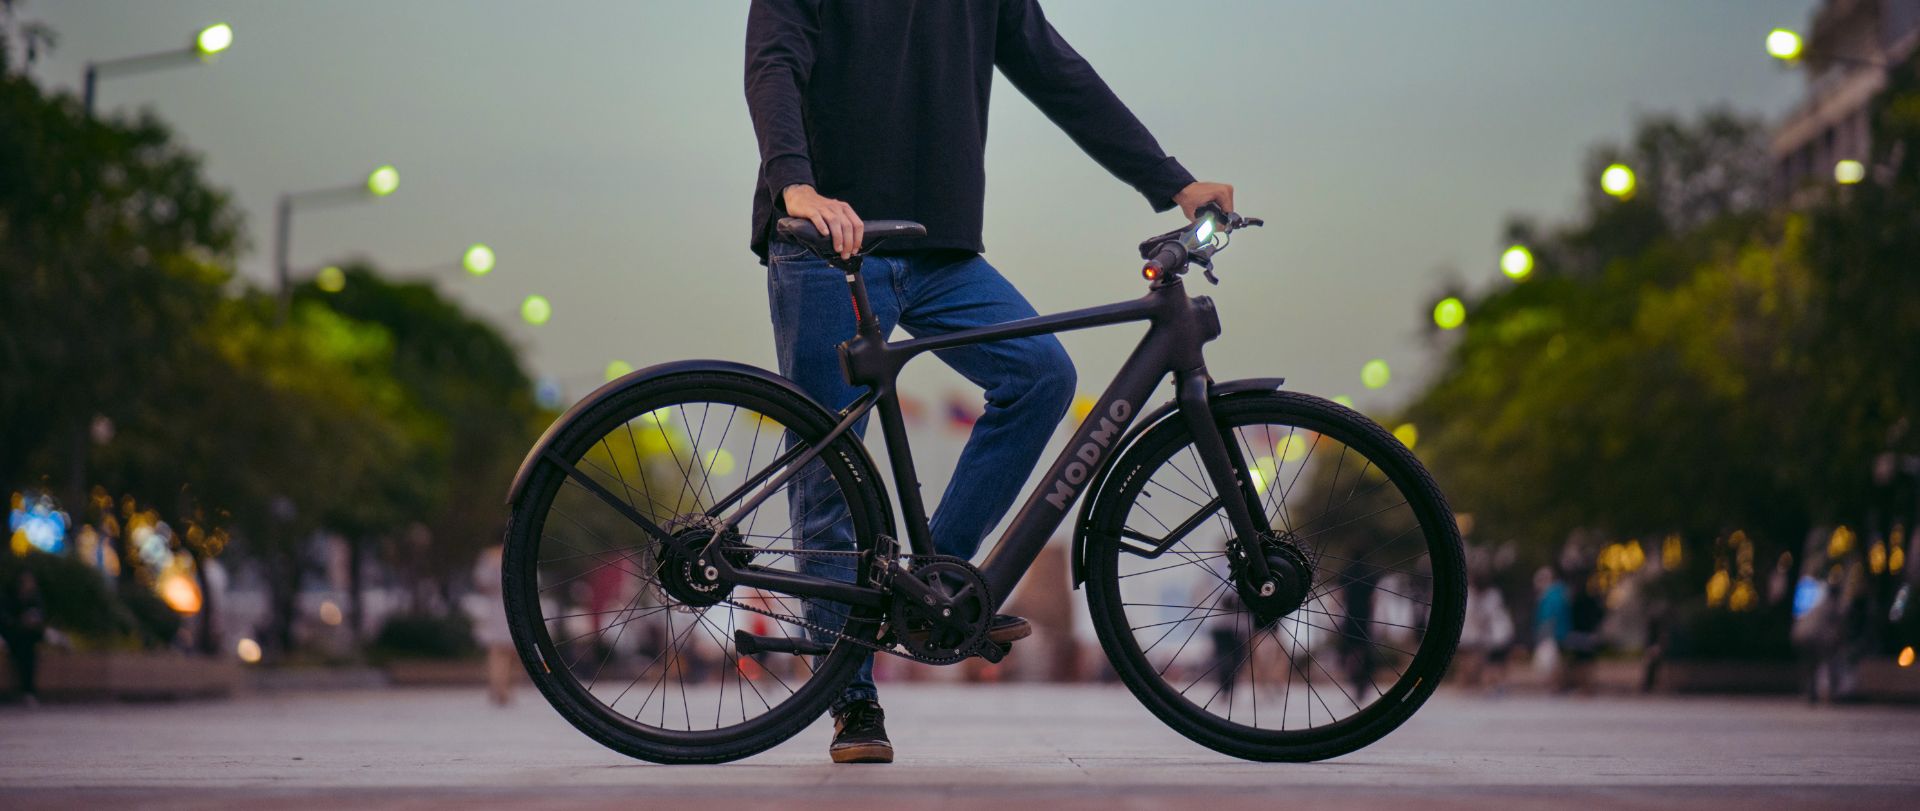 Modmo Saigon+ Electric Bicycle - RRP £2800 - Size L (Rider 175-190cm) - Image 12 of 19